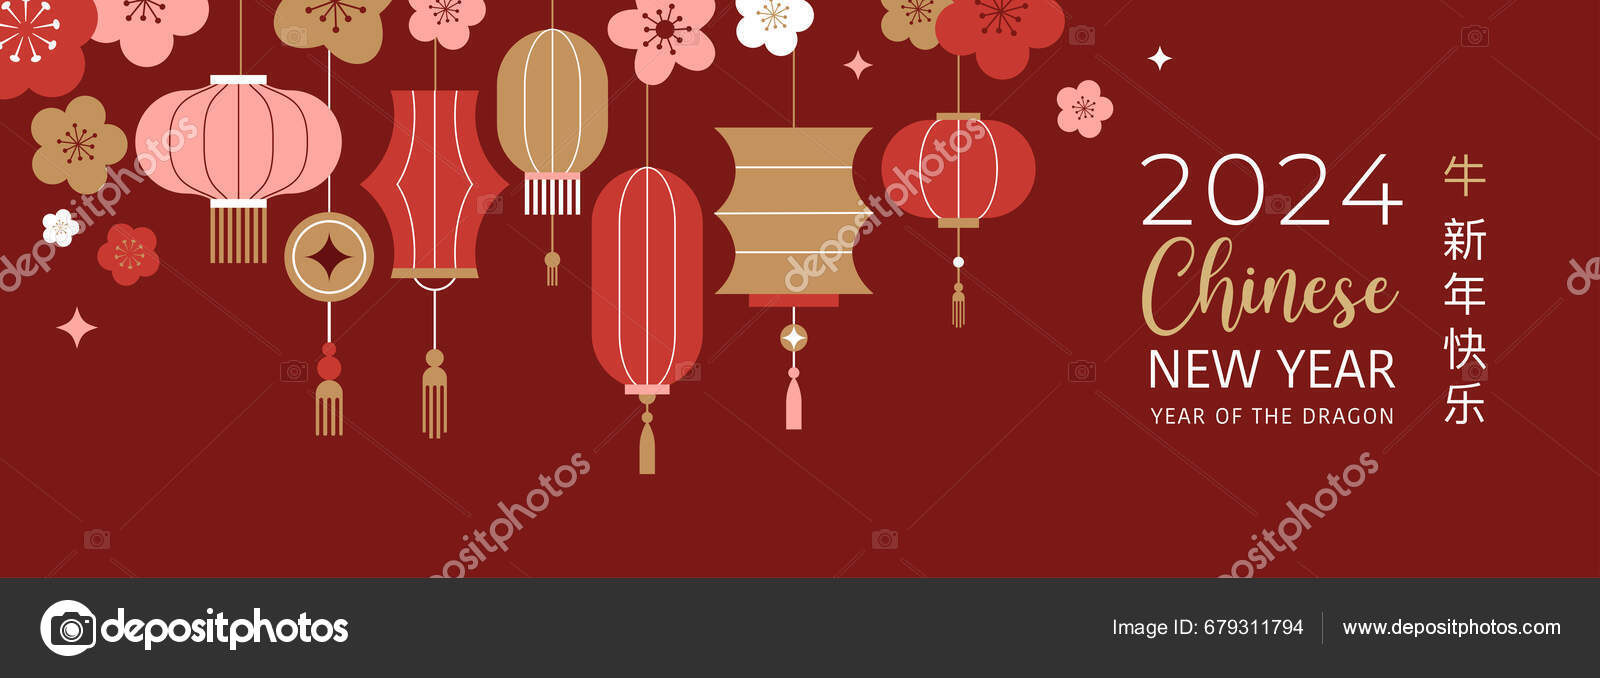 Chinese New Year Banner - Graphics